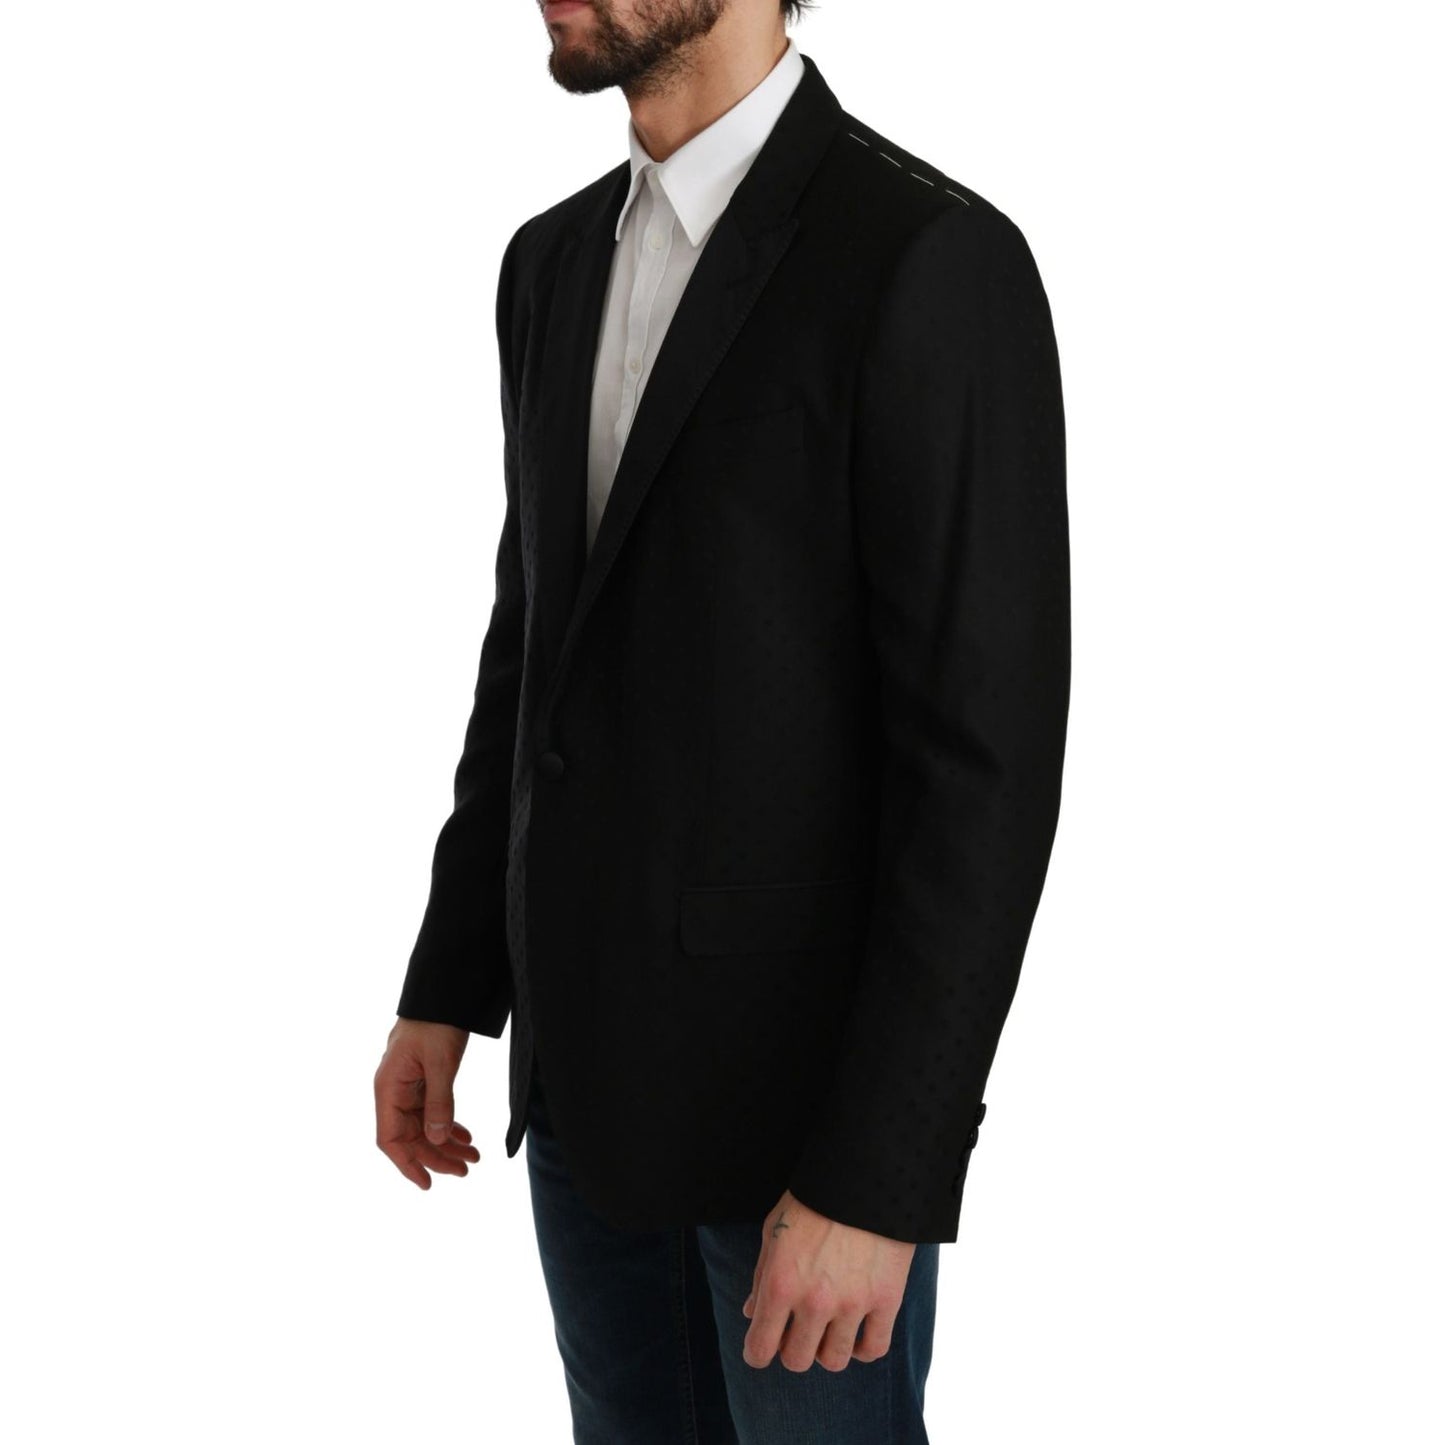 Dolce & Gabbana Polka Dotted Slim Fit Martini Jacket black-slim-fit-coat-jacket-martini-blazer-1 IMG_2558-scaled-7e9a057a-176.jpg